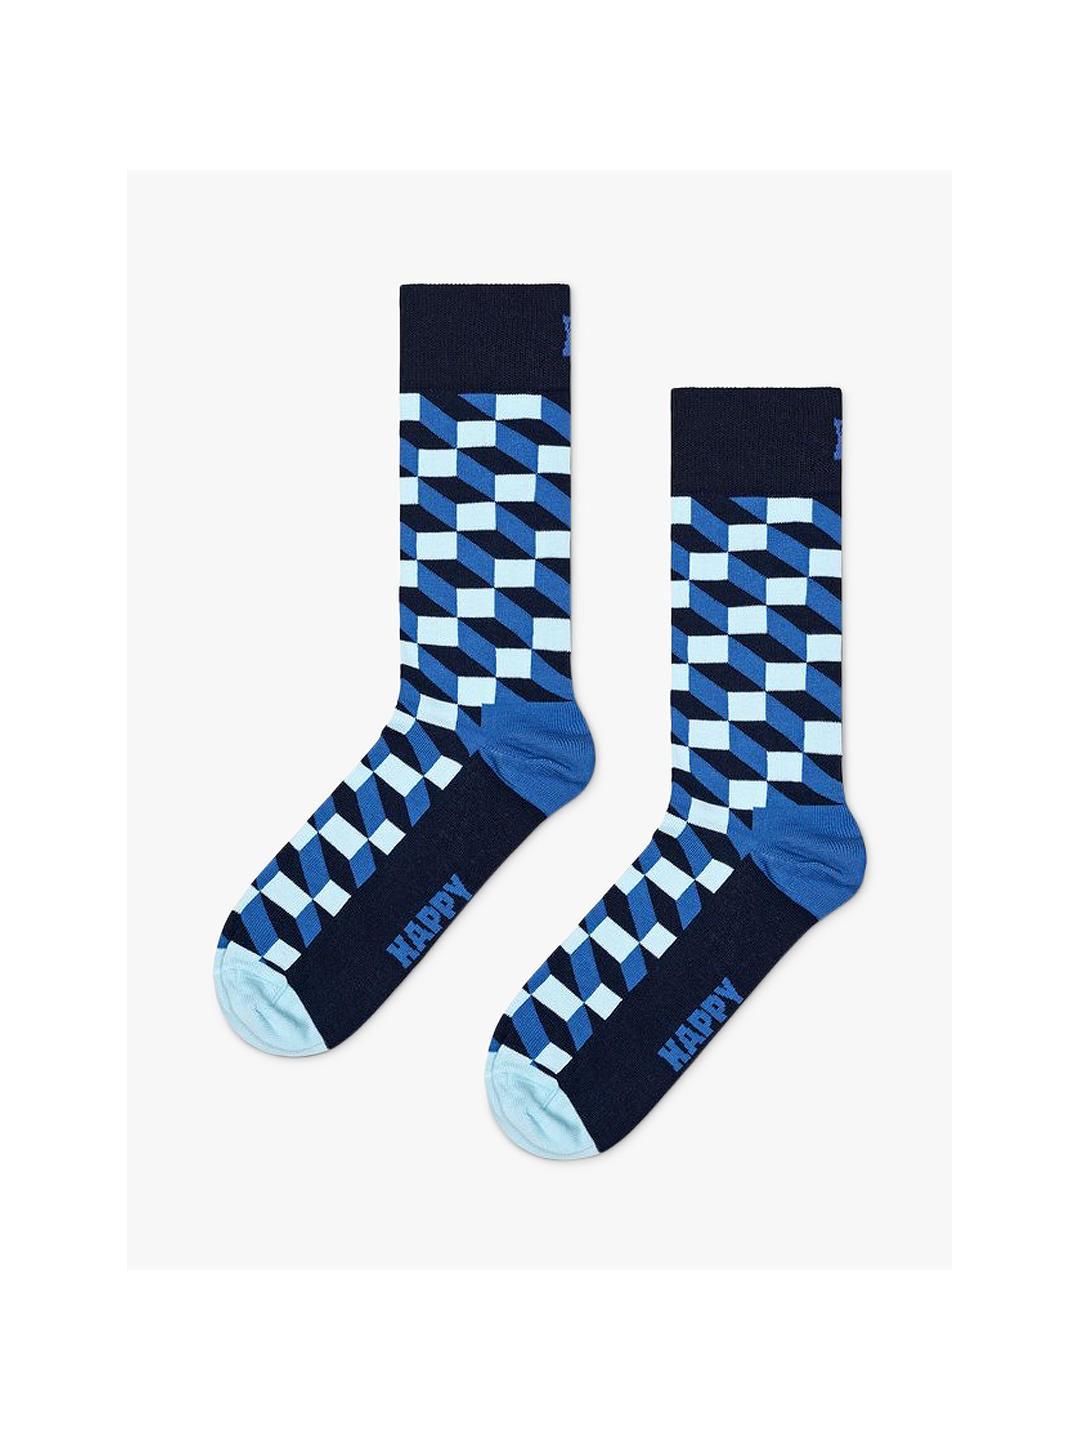 Happy Socks Filled Optic Socks, One Size, Navy/Multi